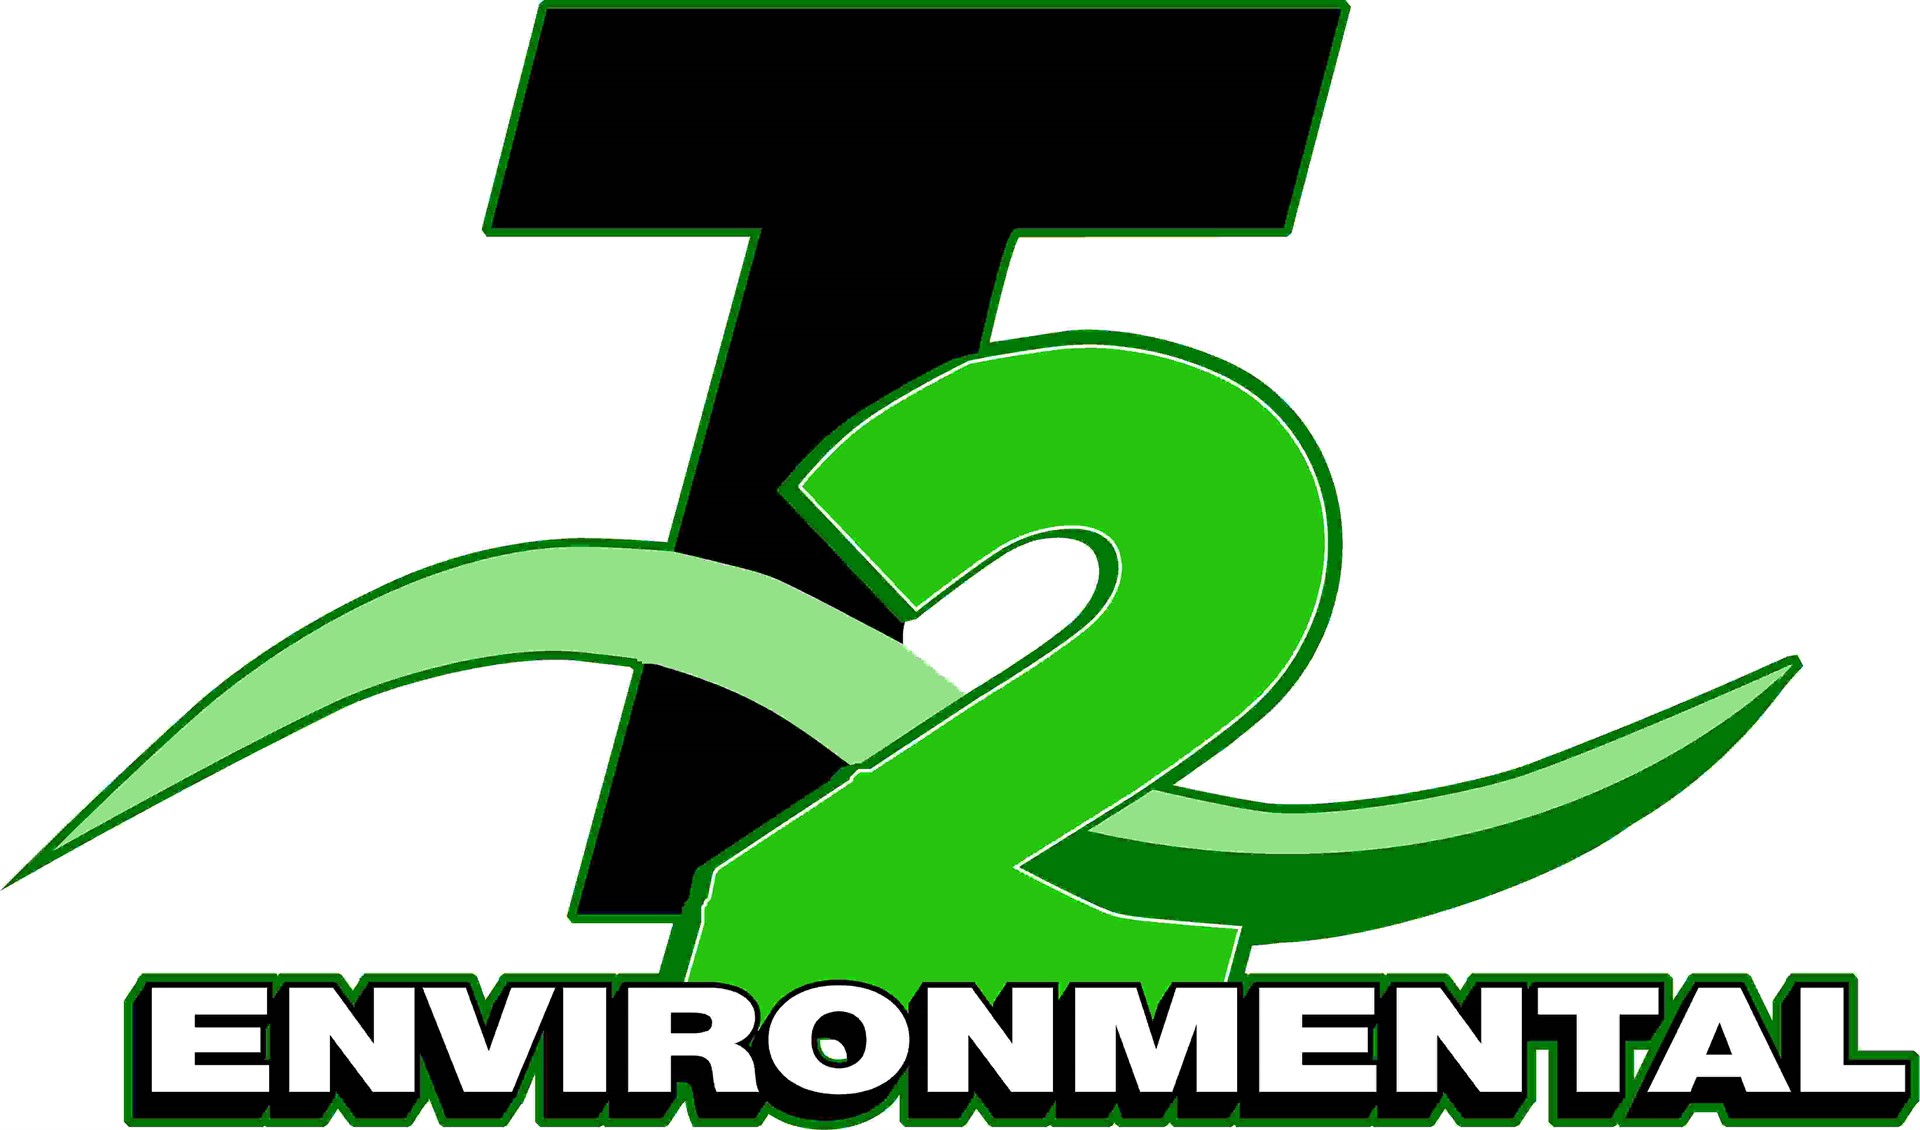 T2 Environmental